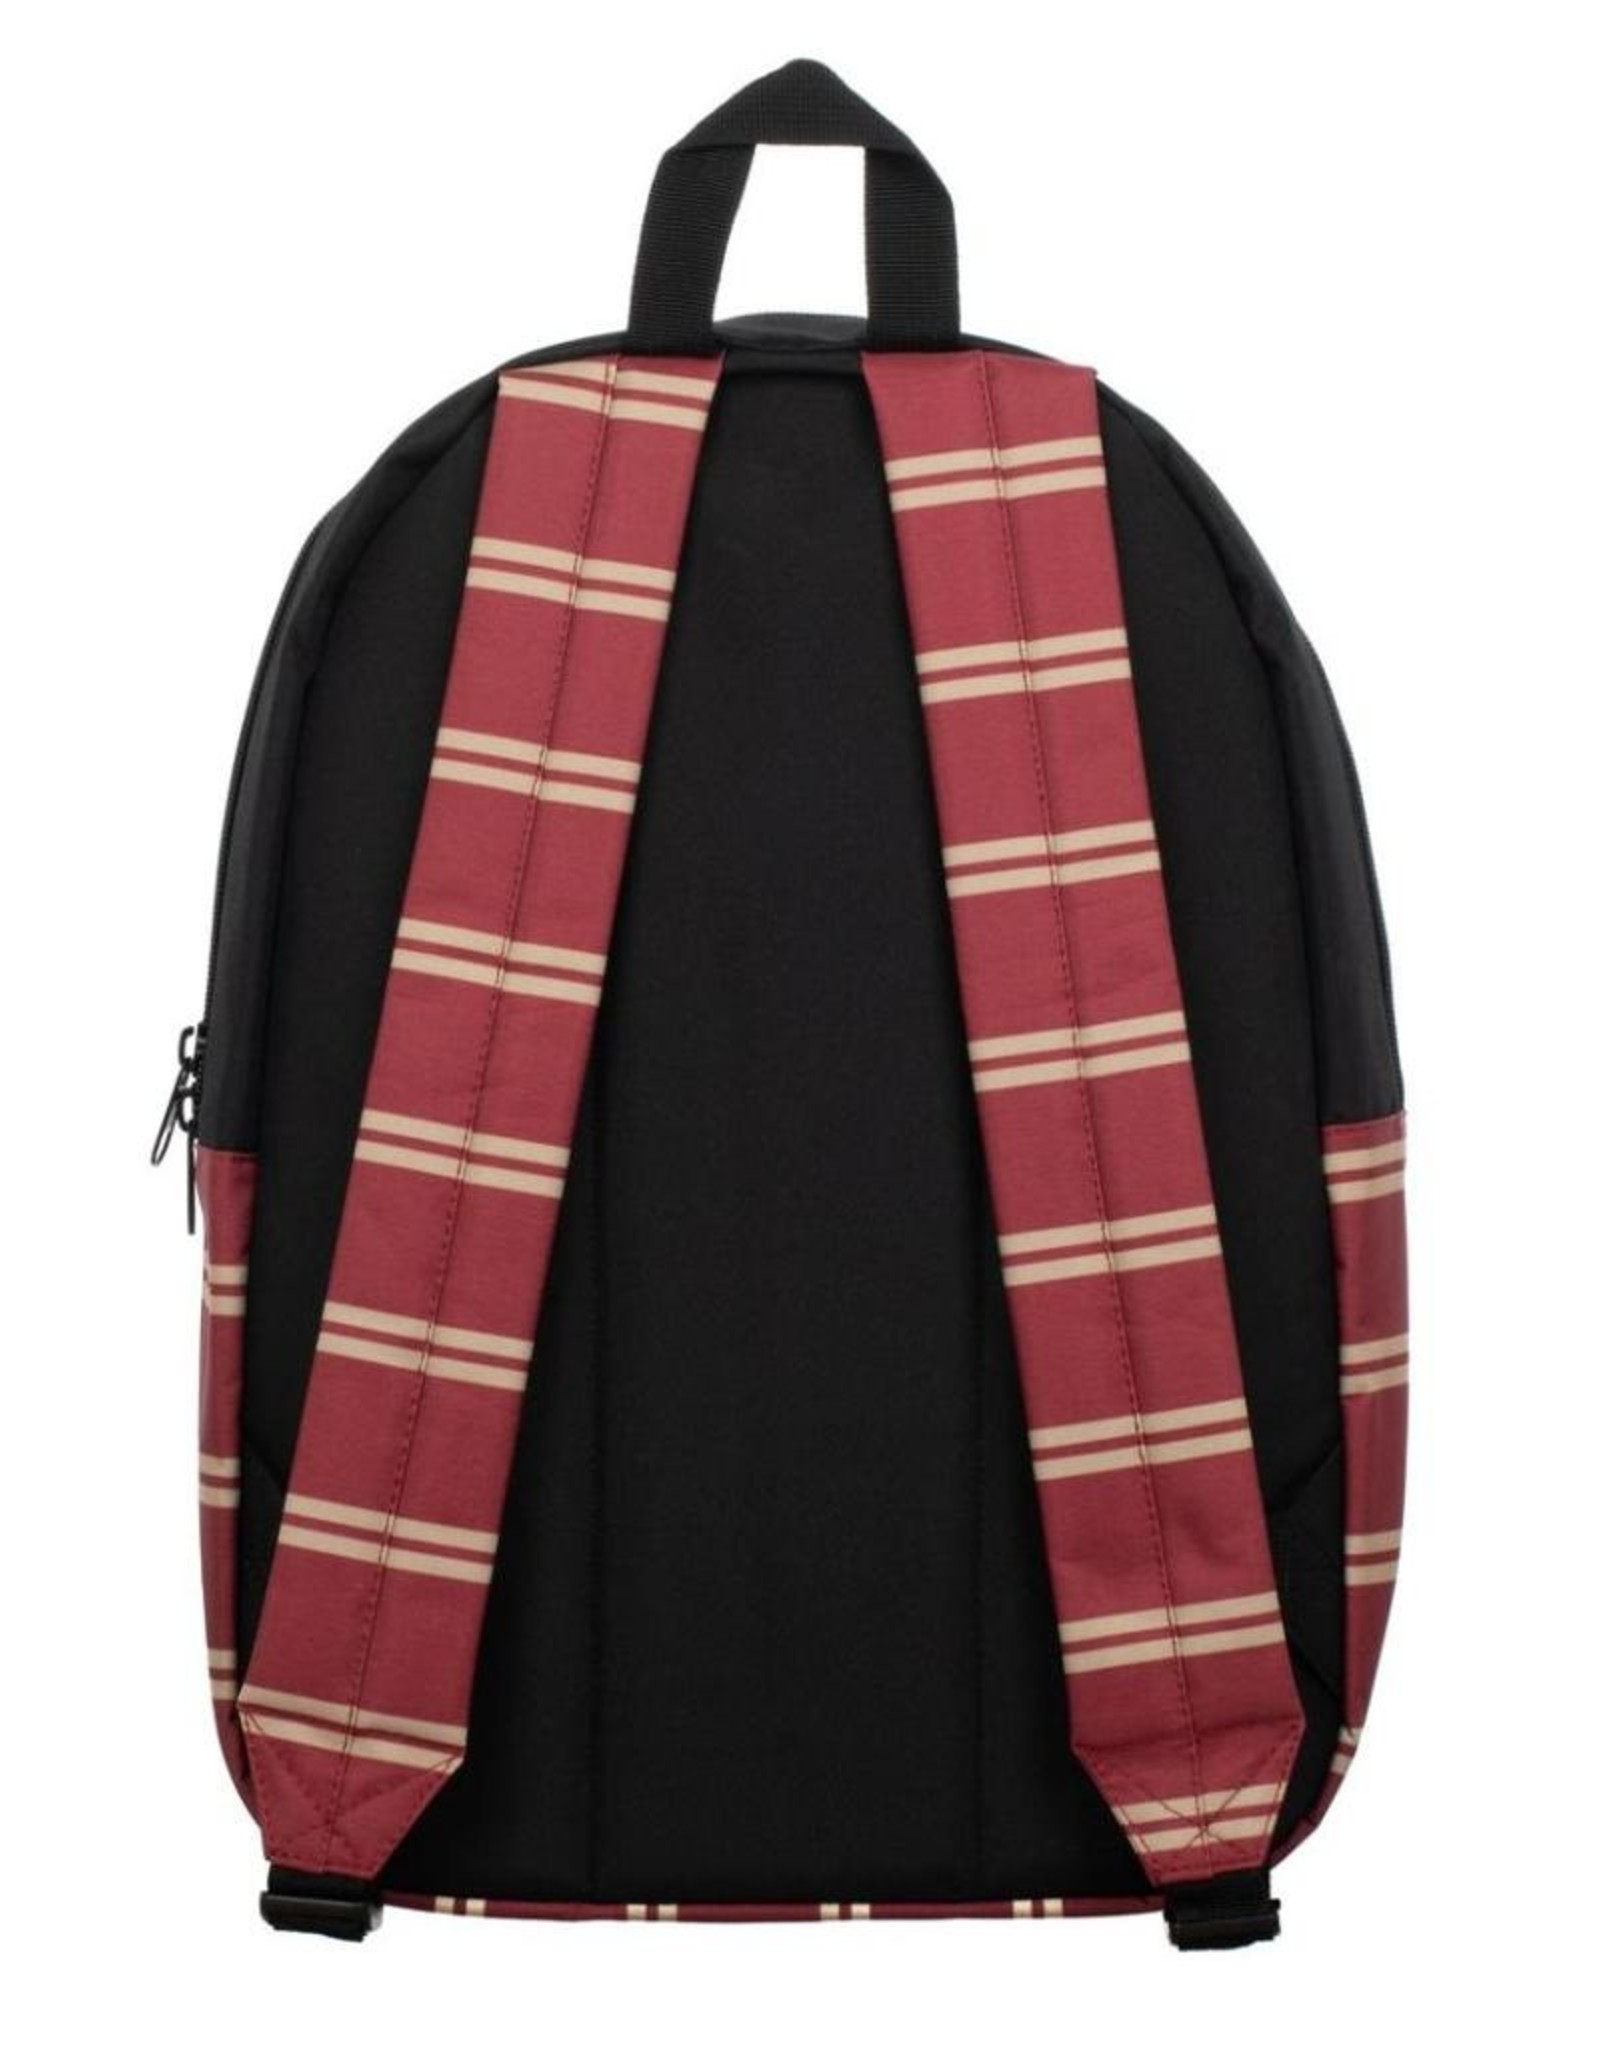 Harry Potter Harry Potter bags and wallets - Harry Potter Admission Letter Backpack